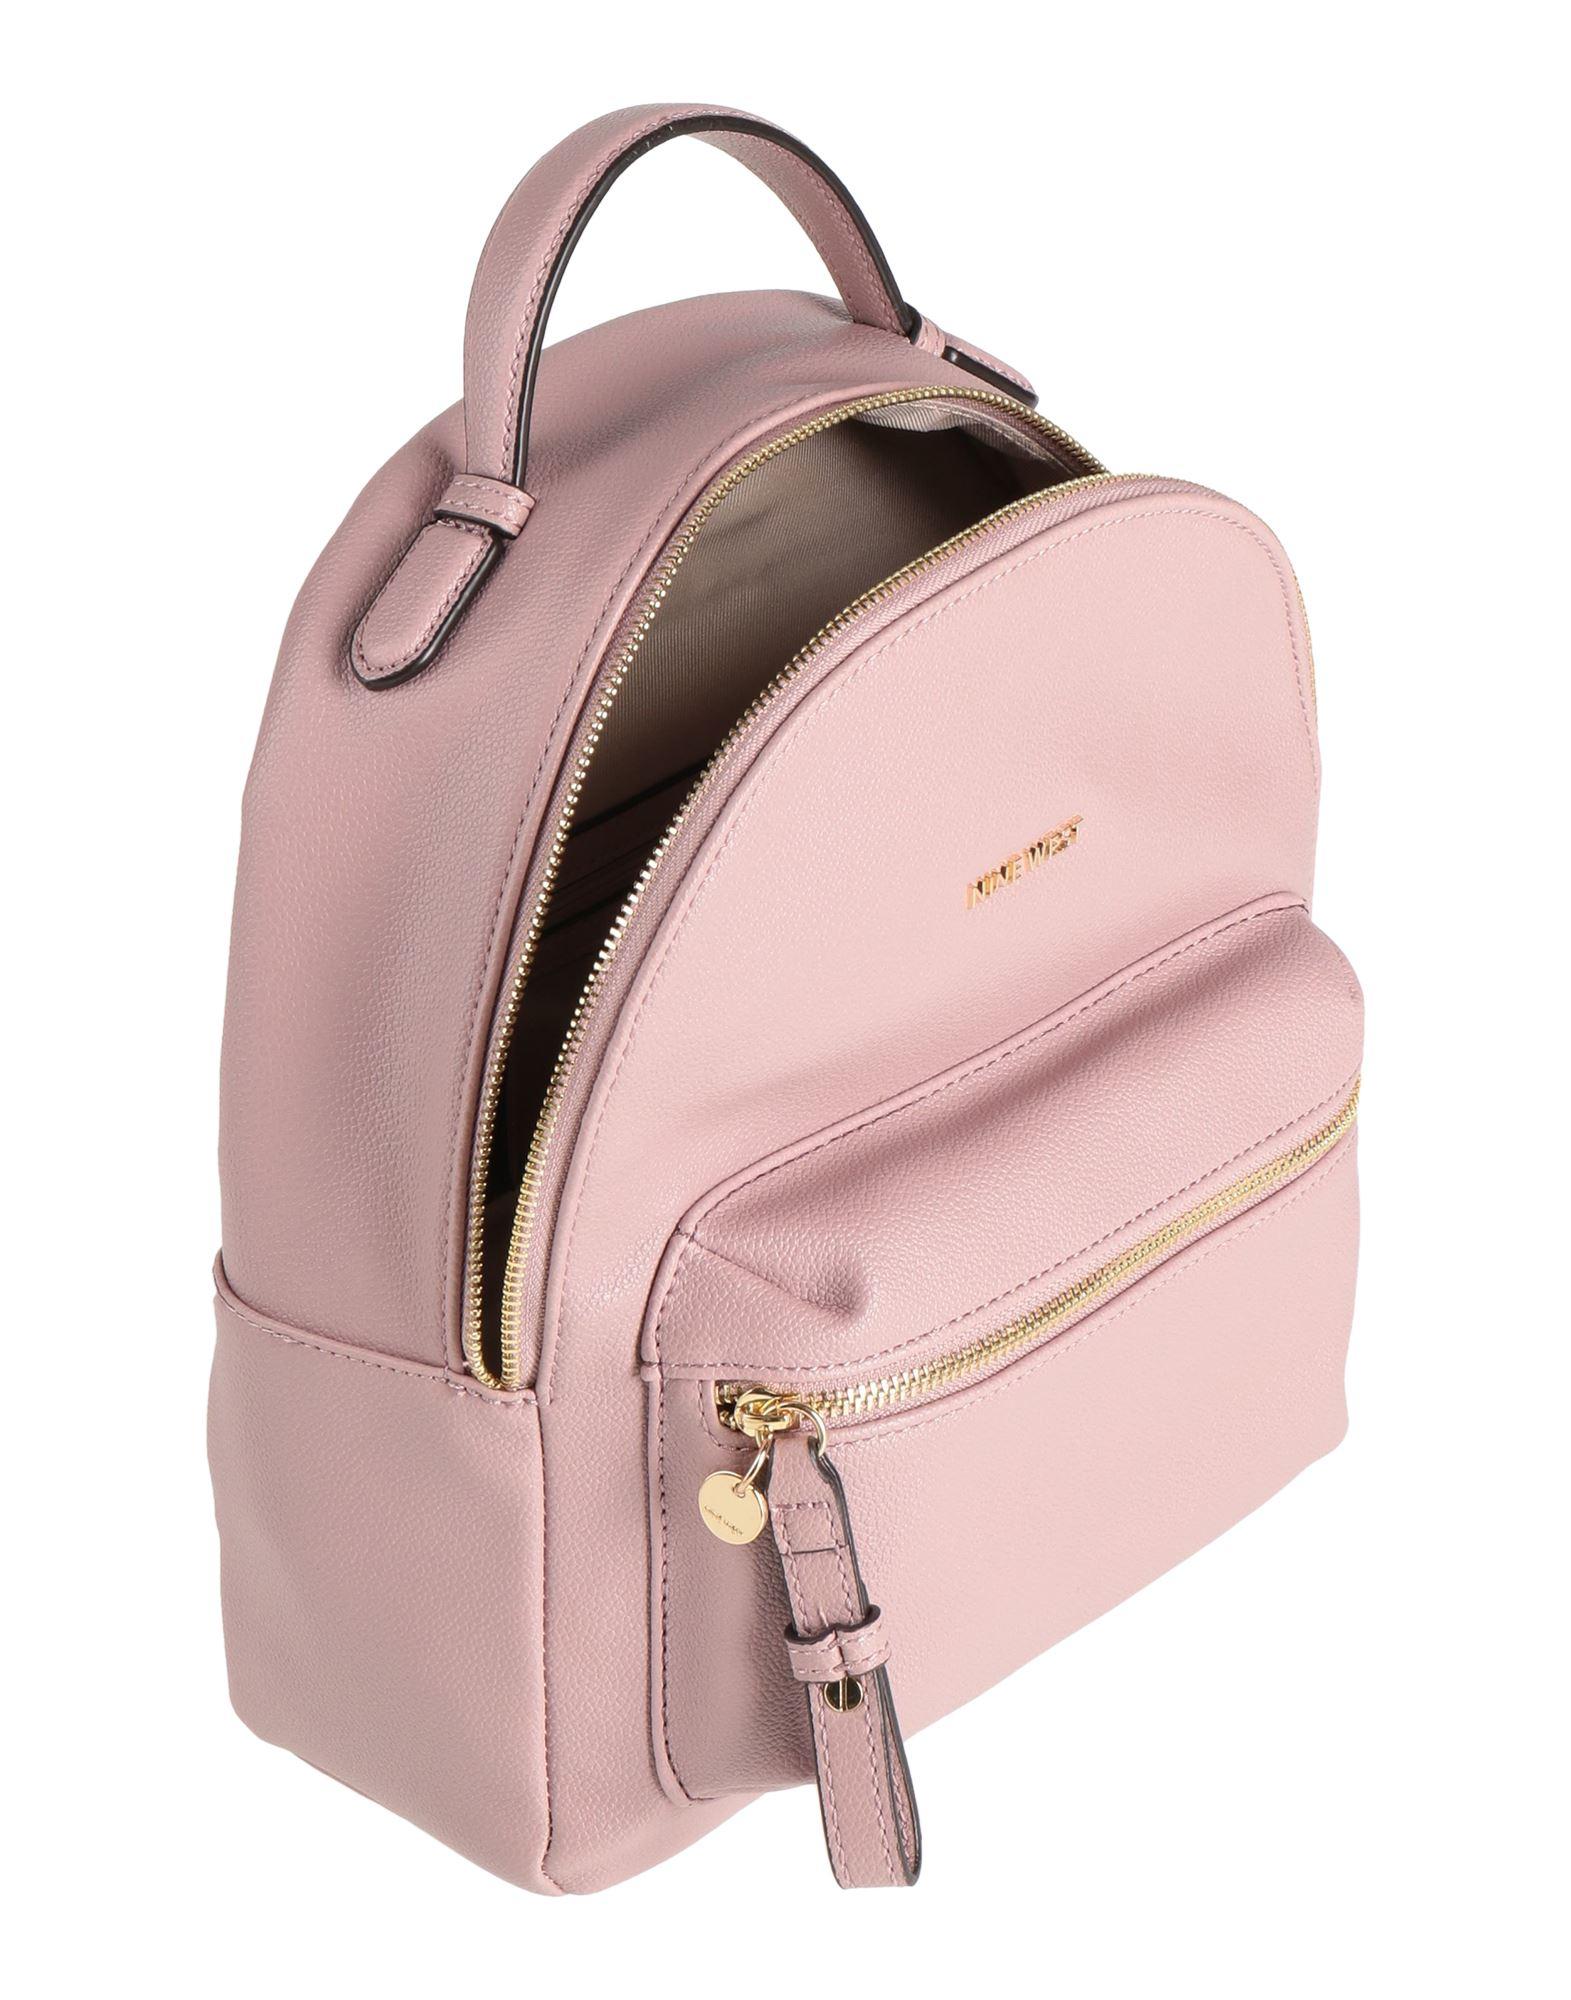 Nine West Neon Green (Very!!!) Mini Backpack, Women's Fashion